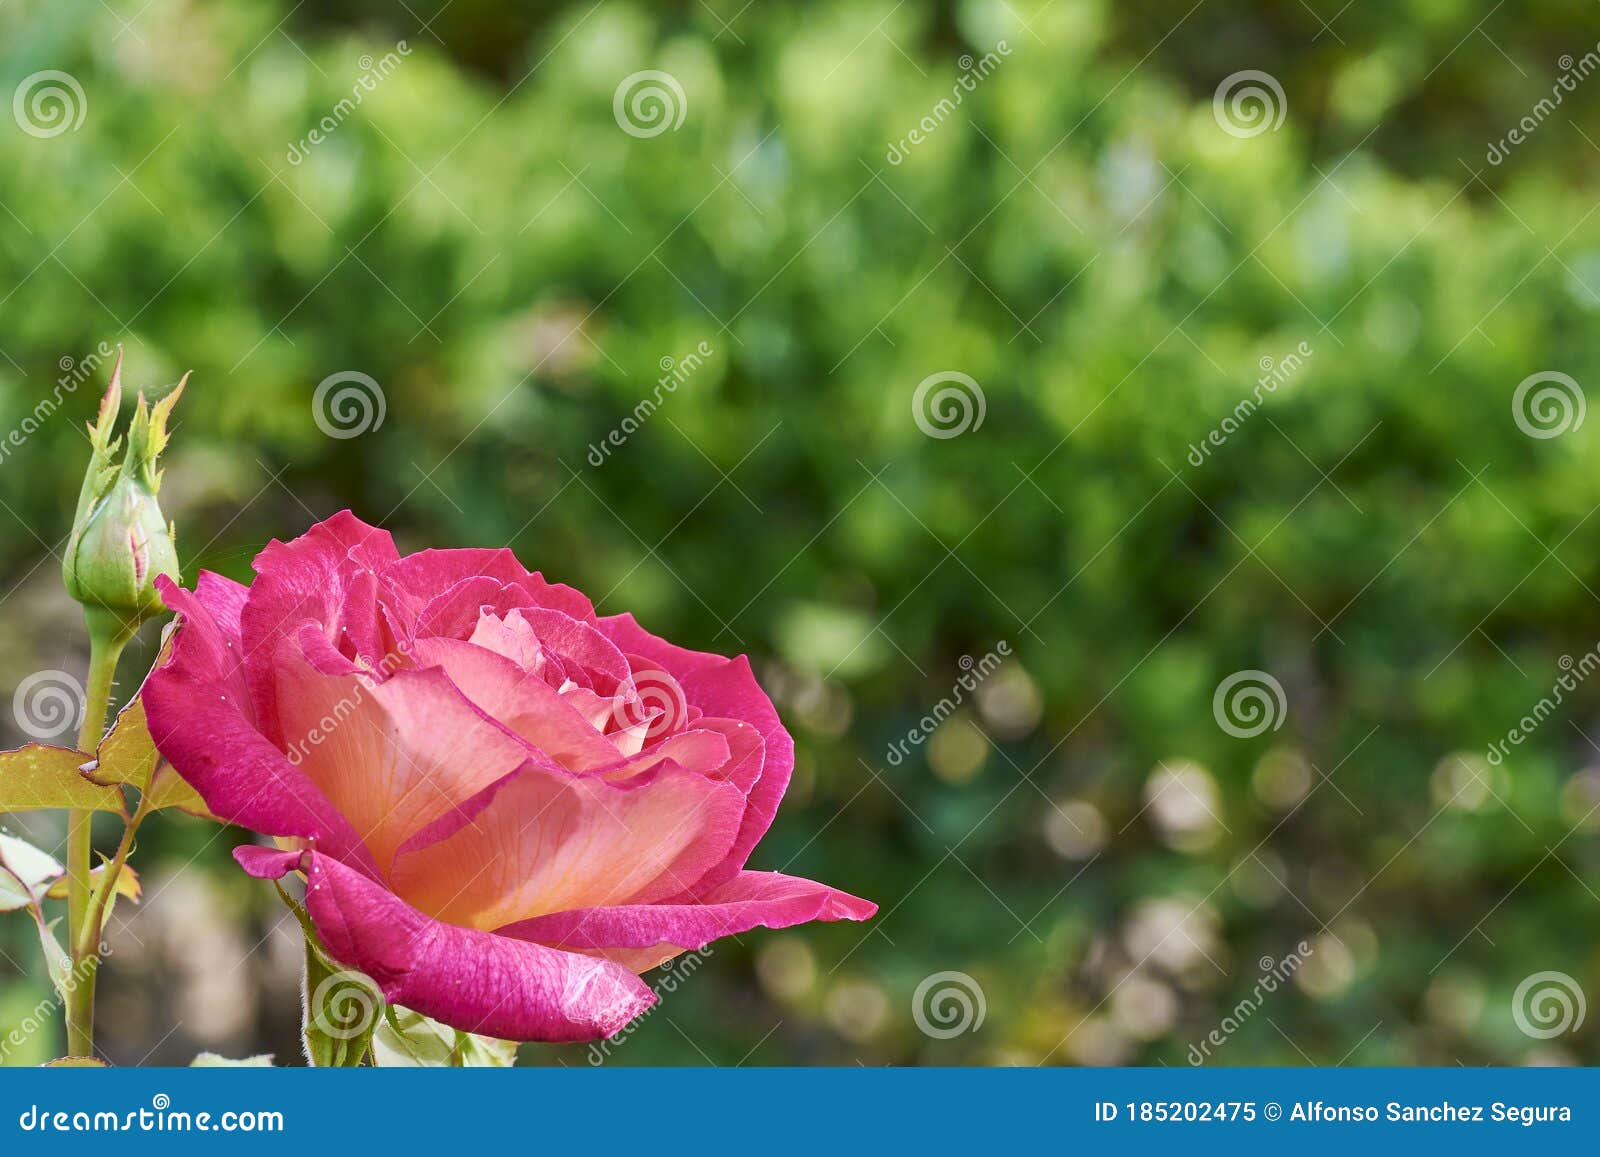 big pink rose in left bottom corner with green blurred background